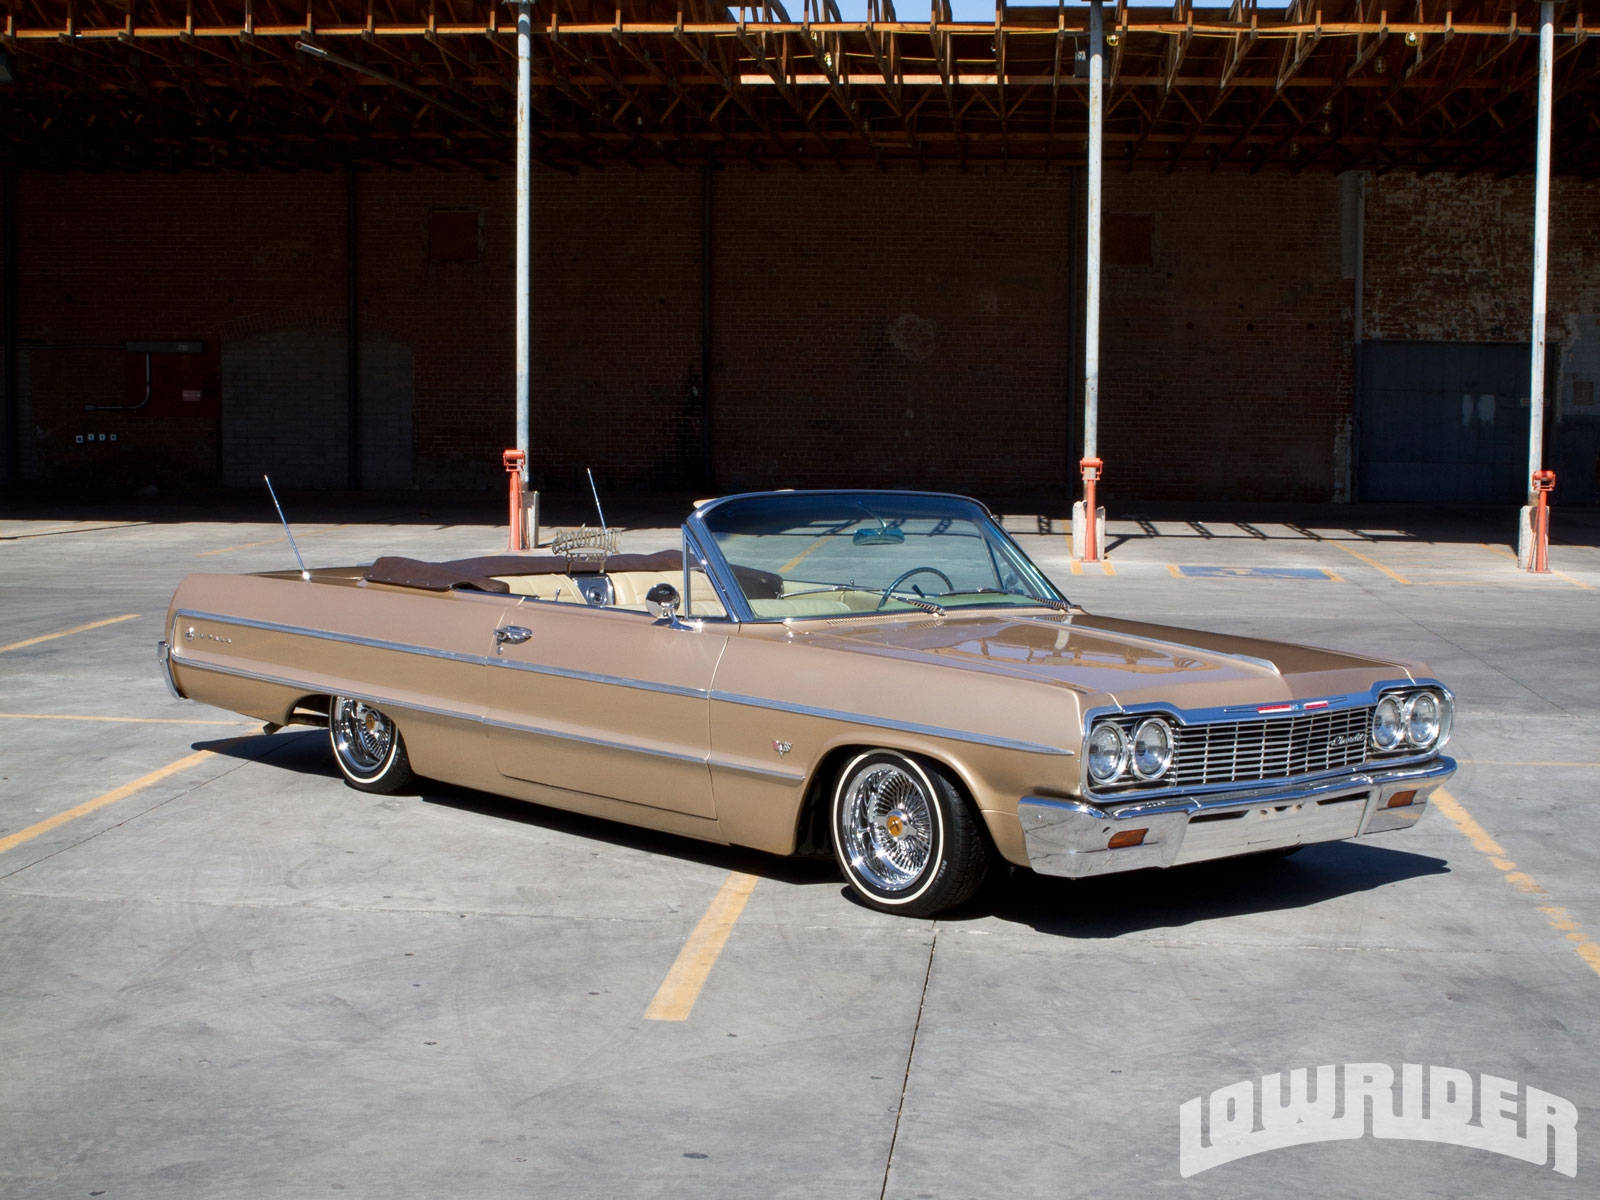 Lowrider Cream-colored 1964 Impala